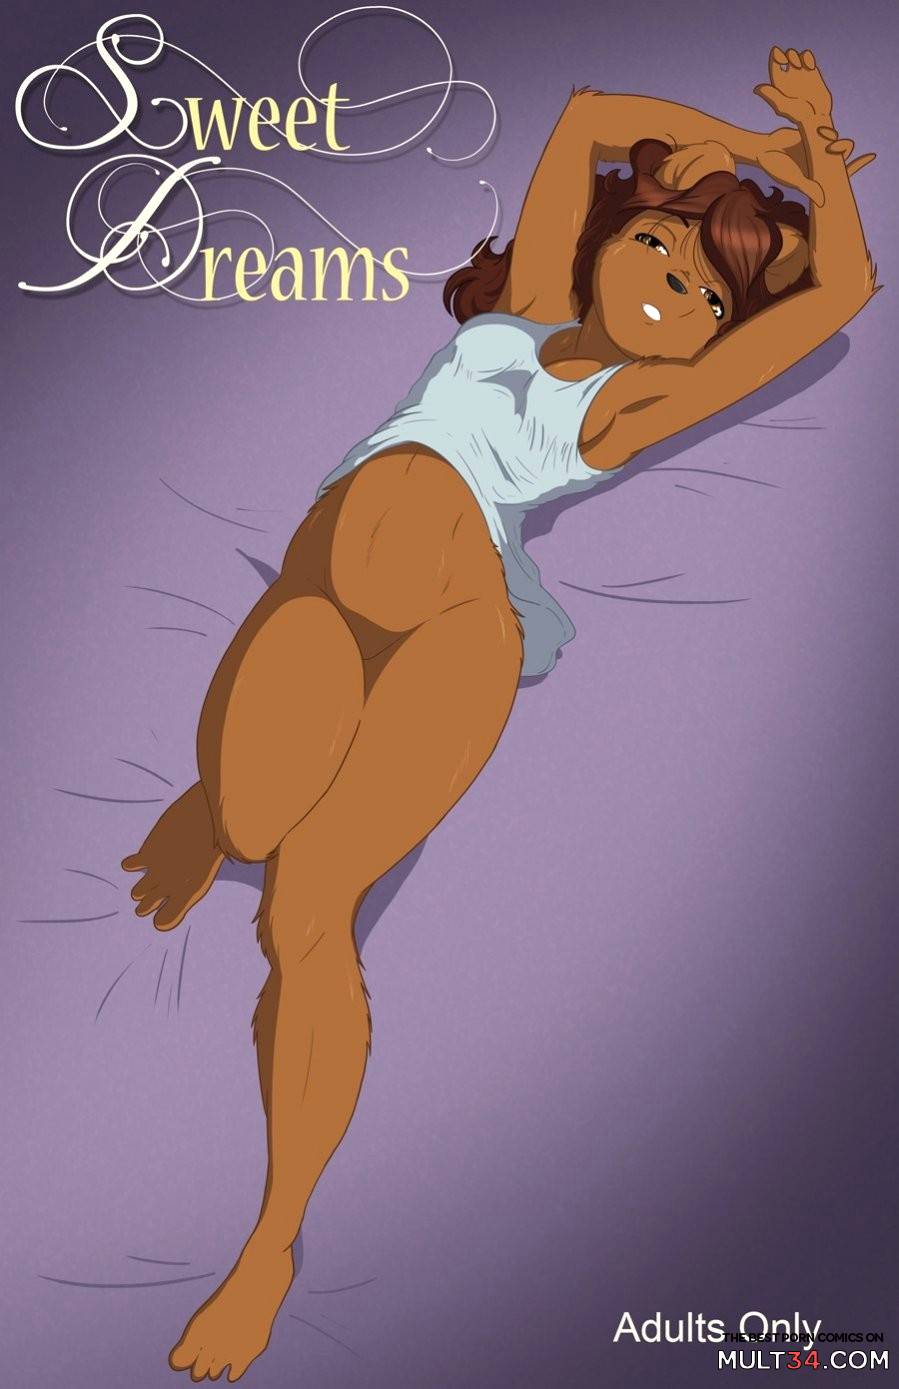 Sweet dreams porn comic - the best cartoon porn comics, Rule 34 | MULT34